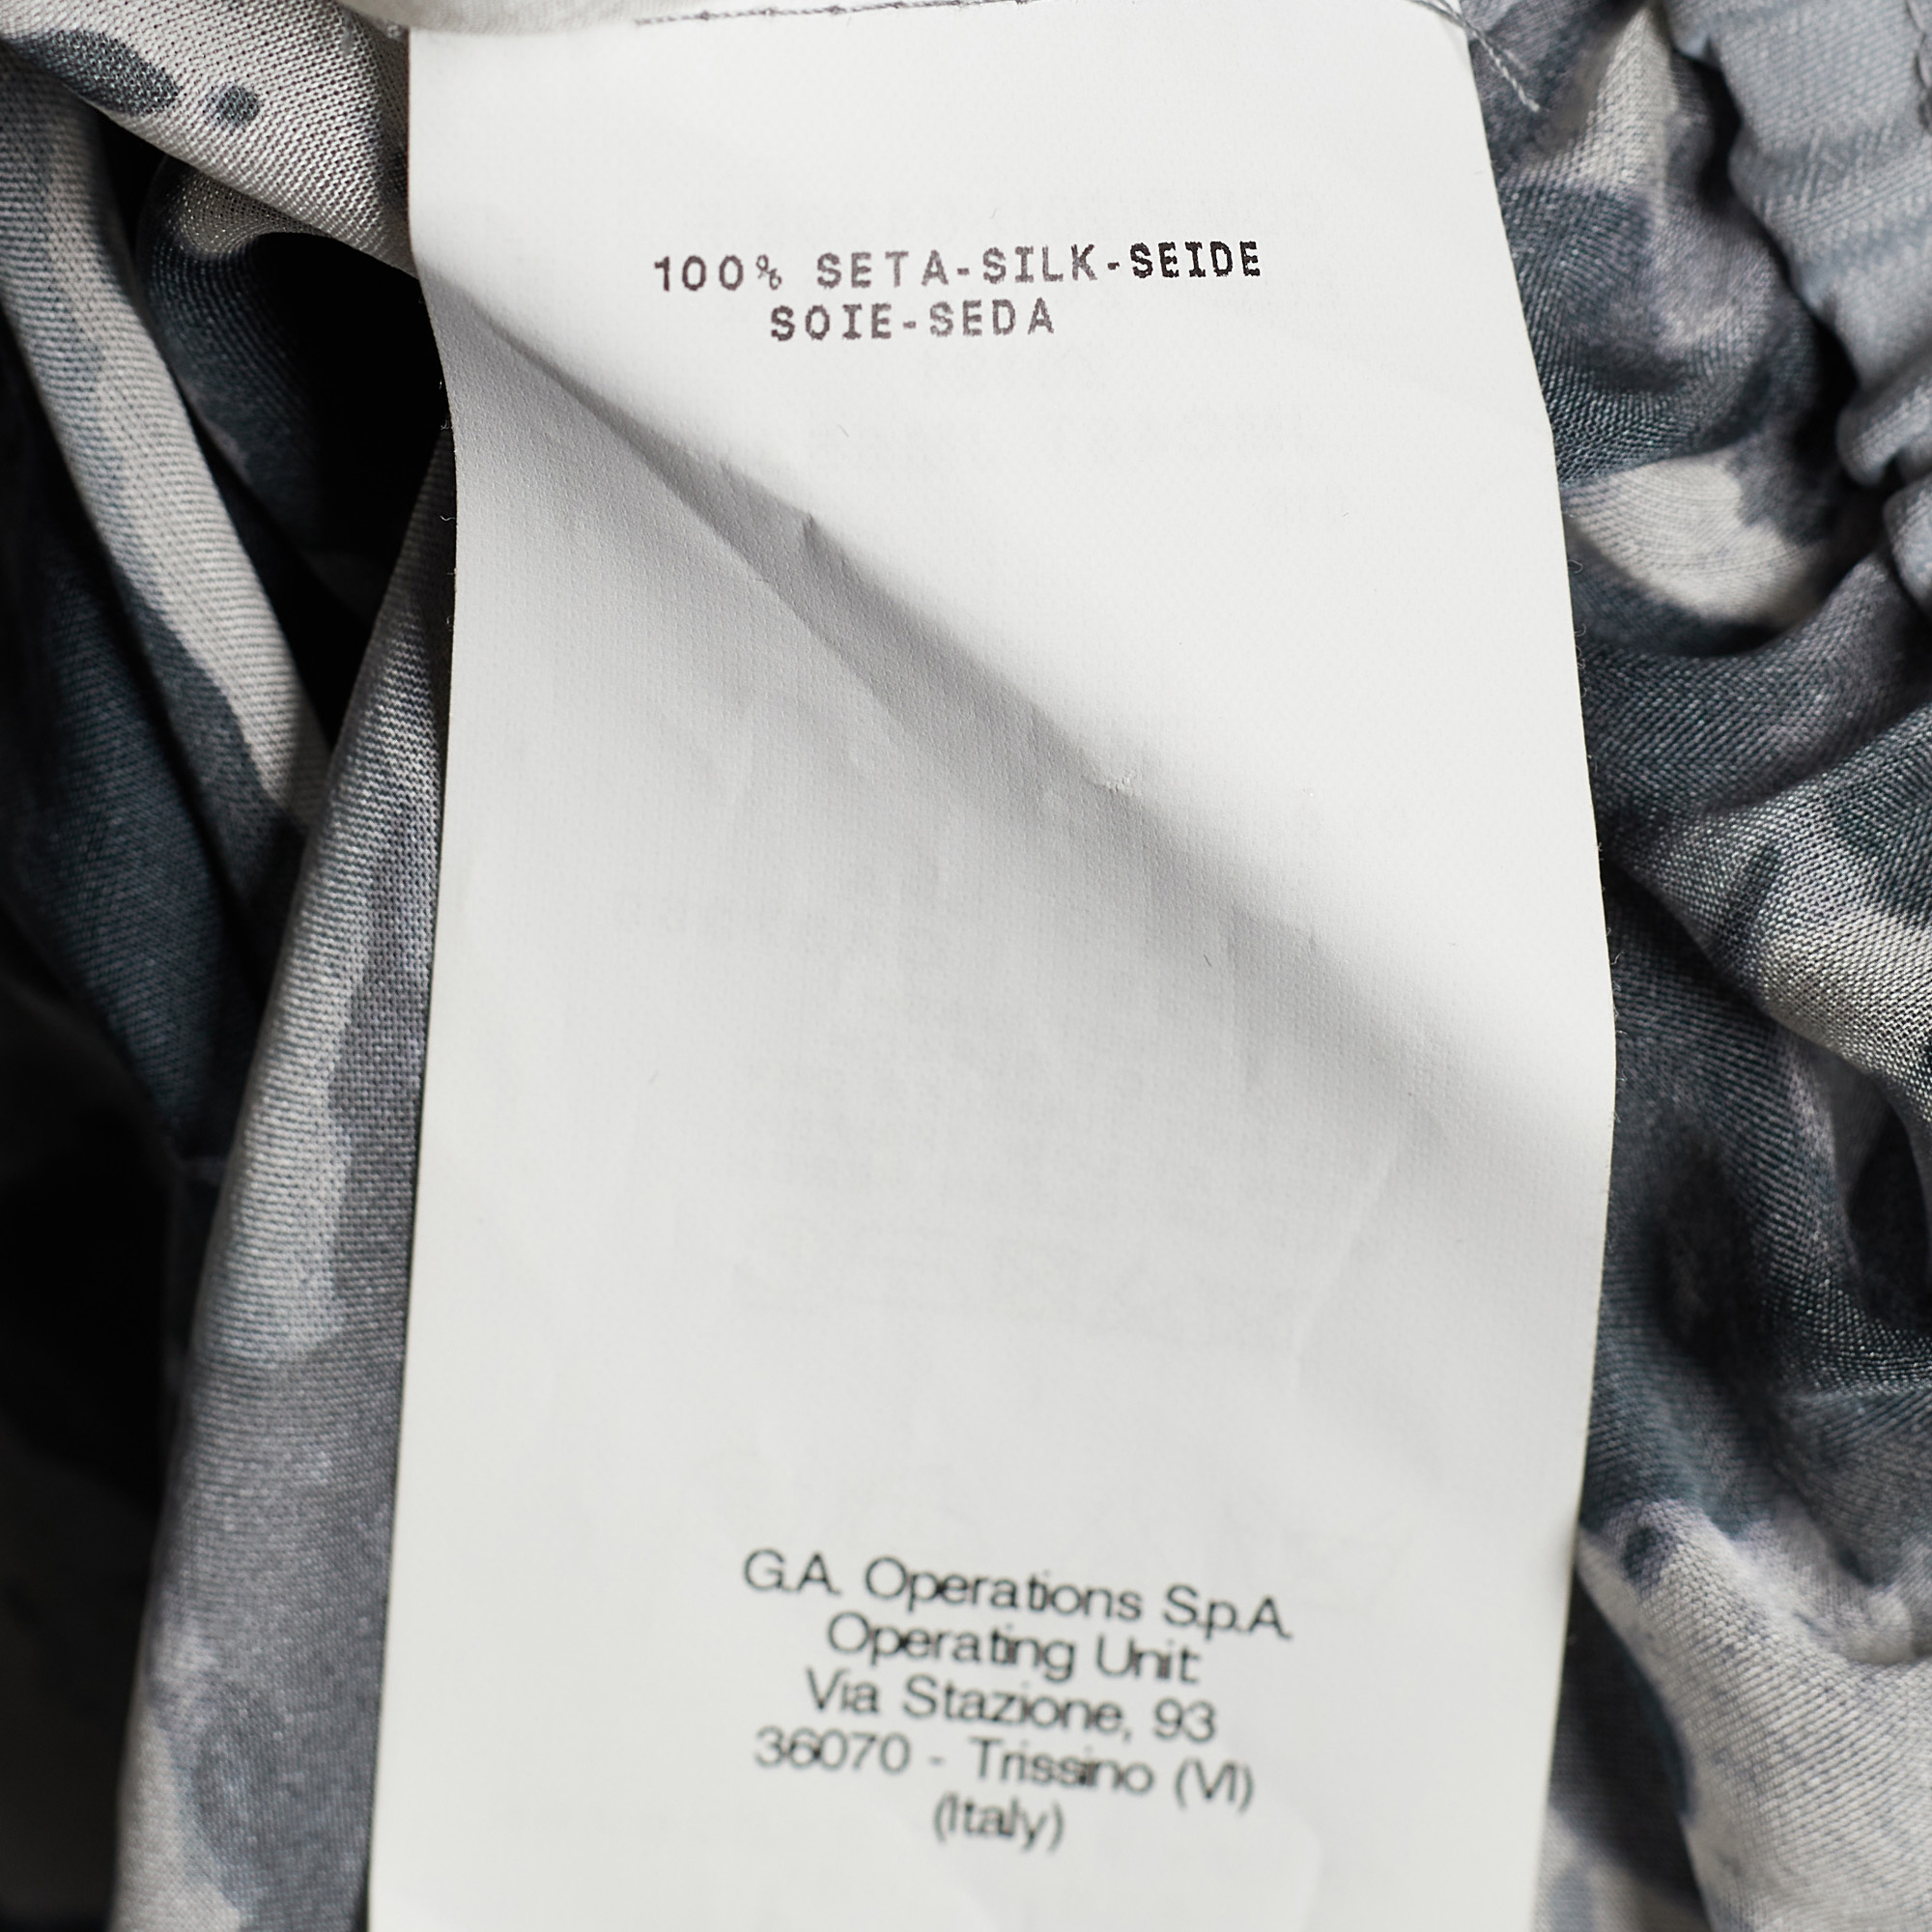 Armani Collezioni Grey Abstract Print Silk Sheer Blouse M